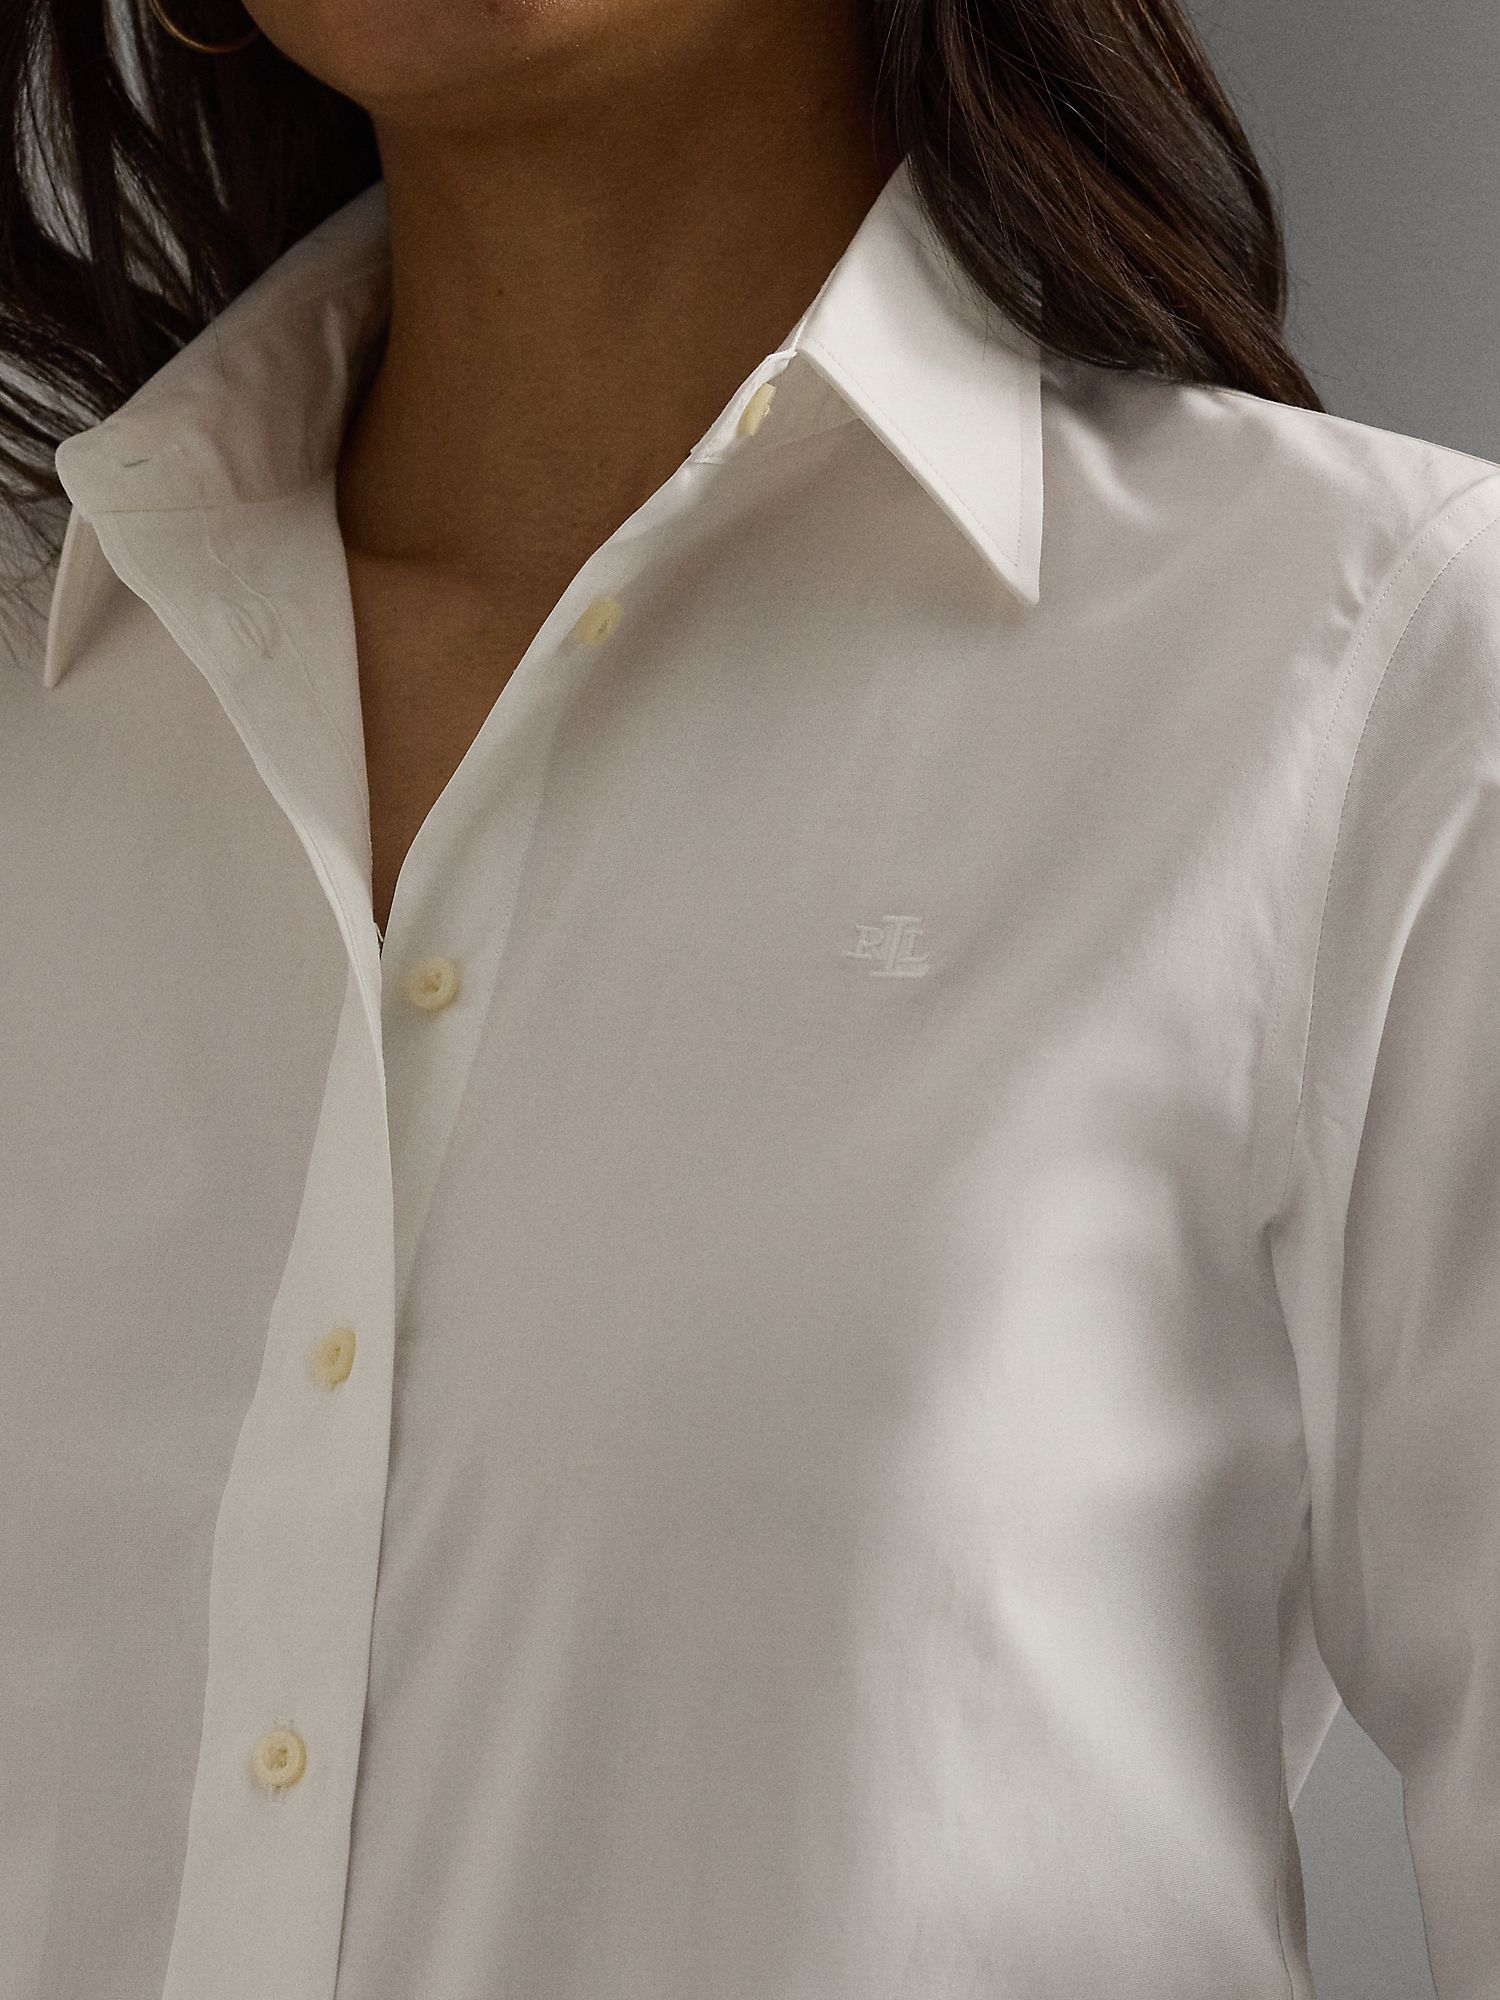 Lauren Ralph Lauren Jamelko Long Sleeve Shirt, White, L